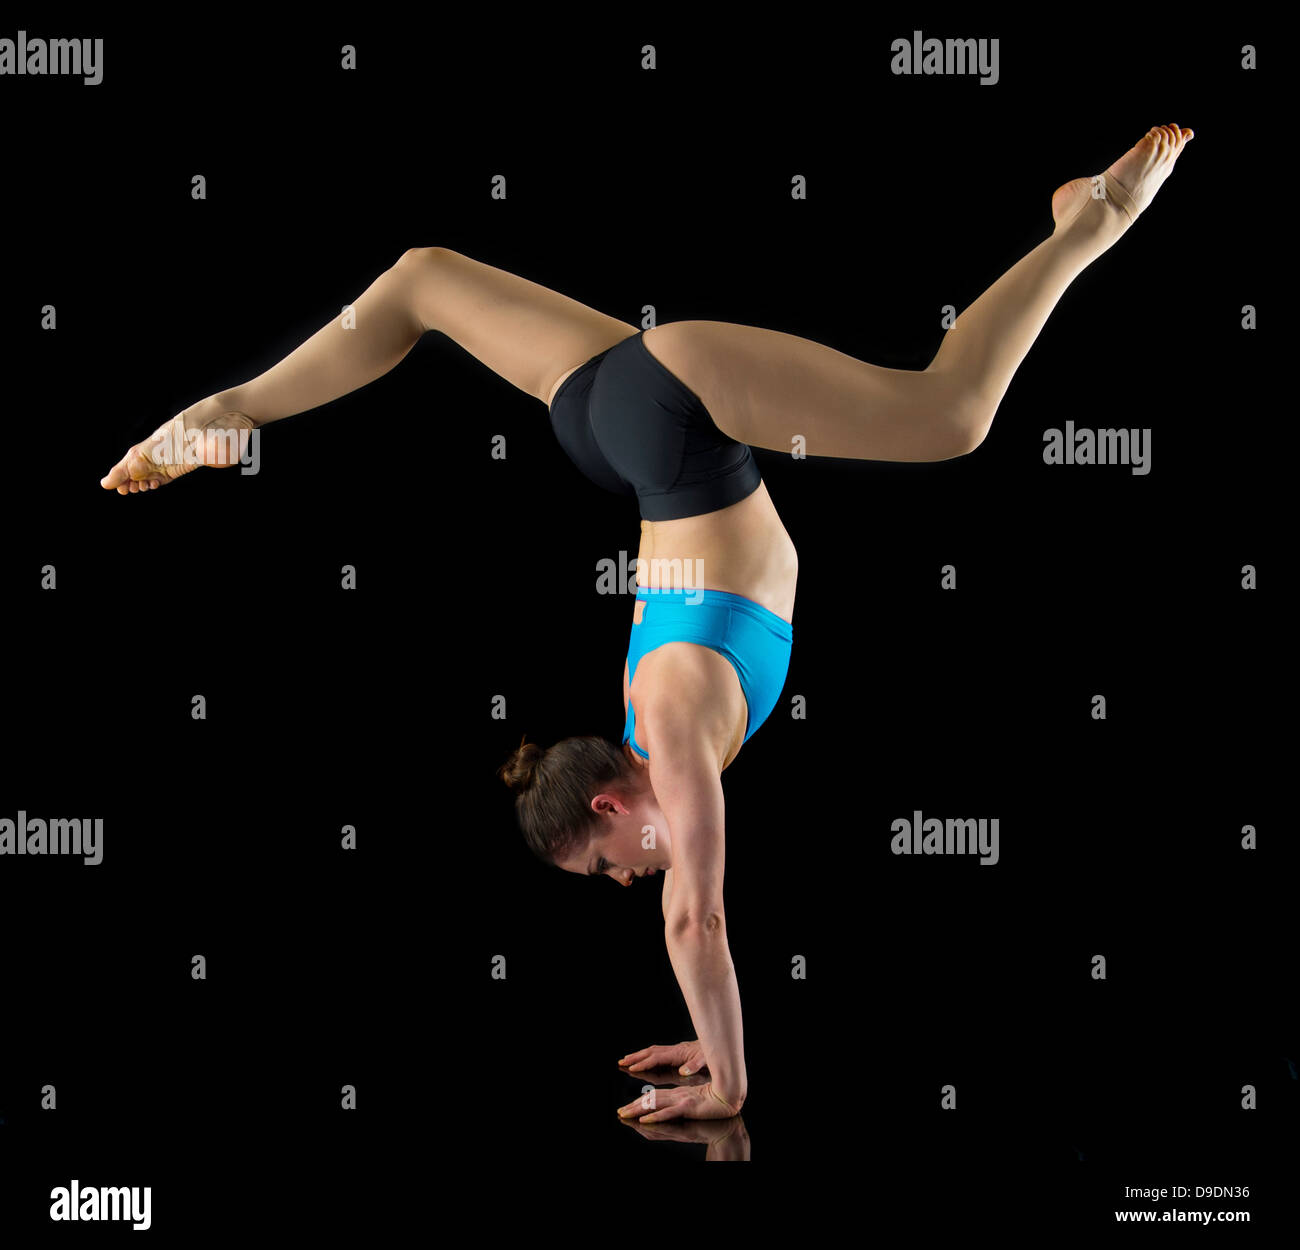 Acrobat performing handstand in front of black background Banque D'Images